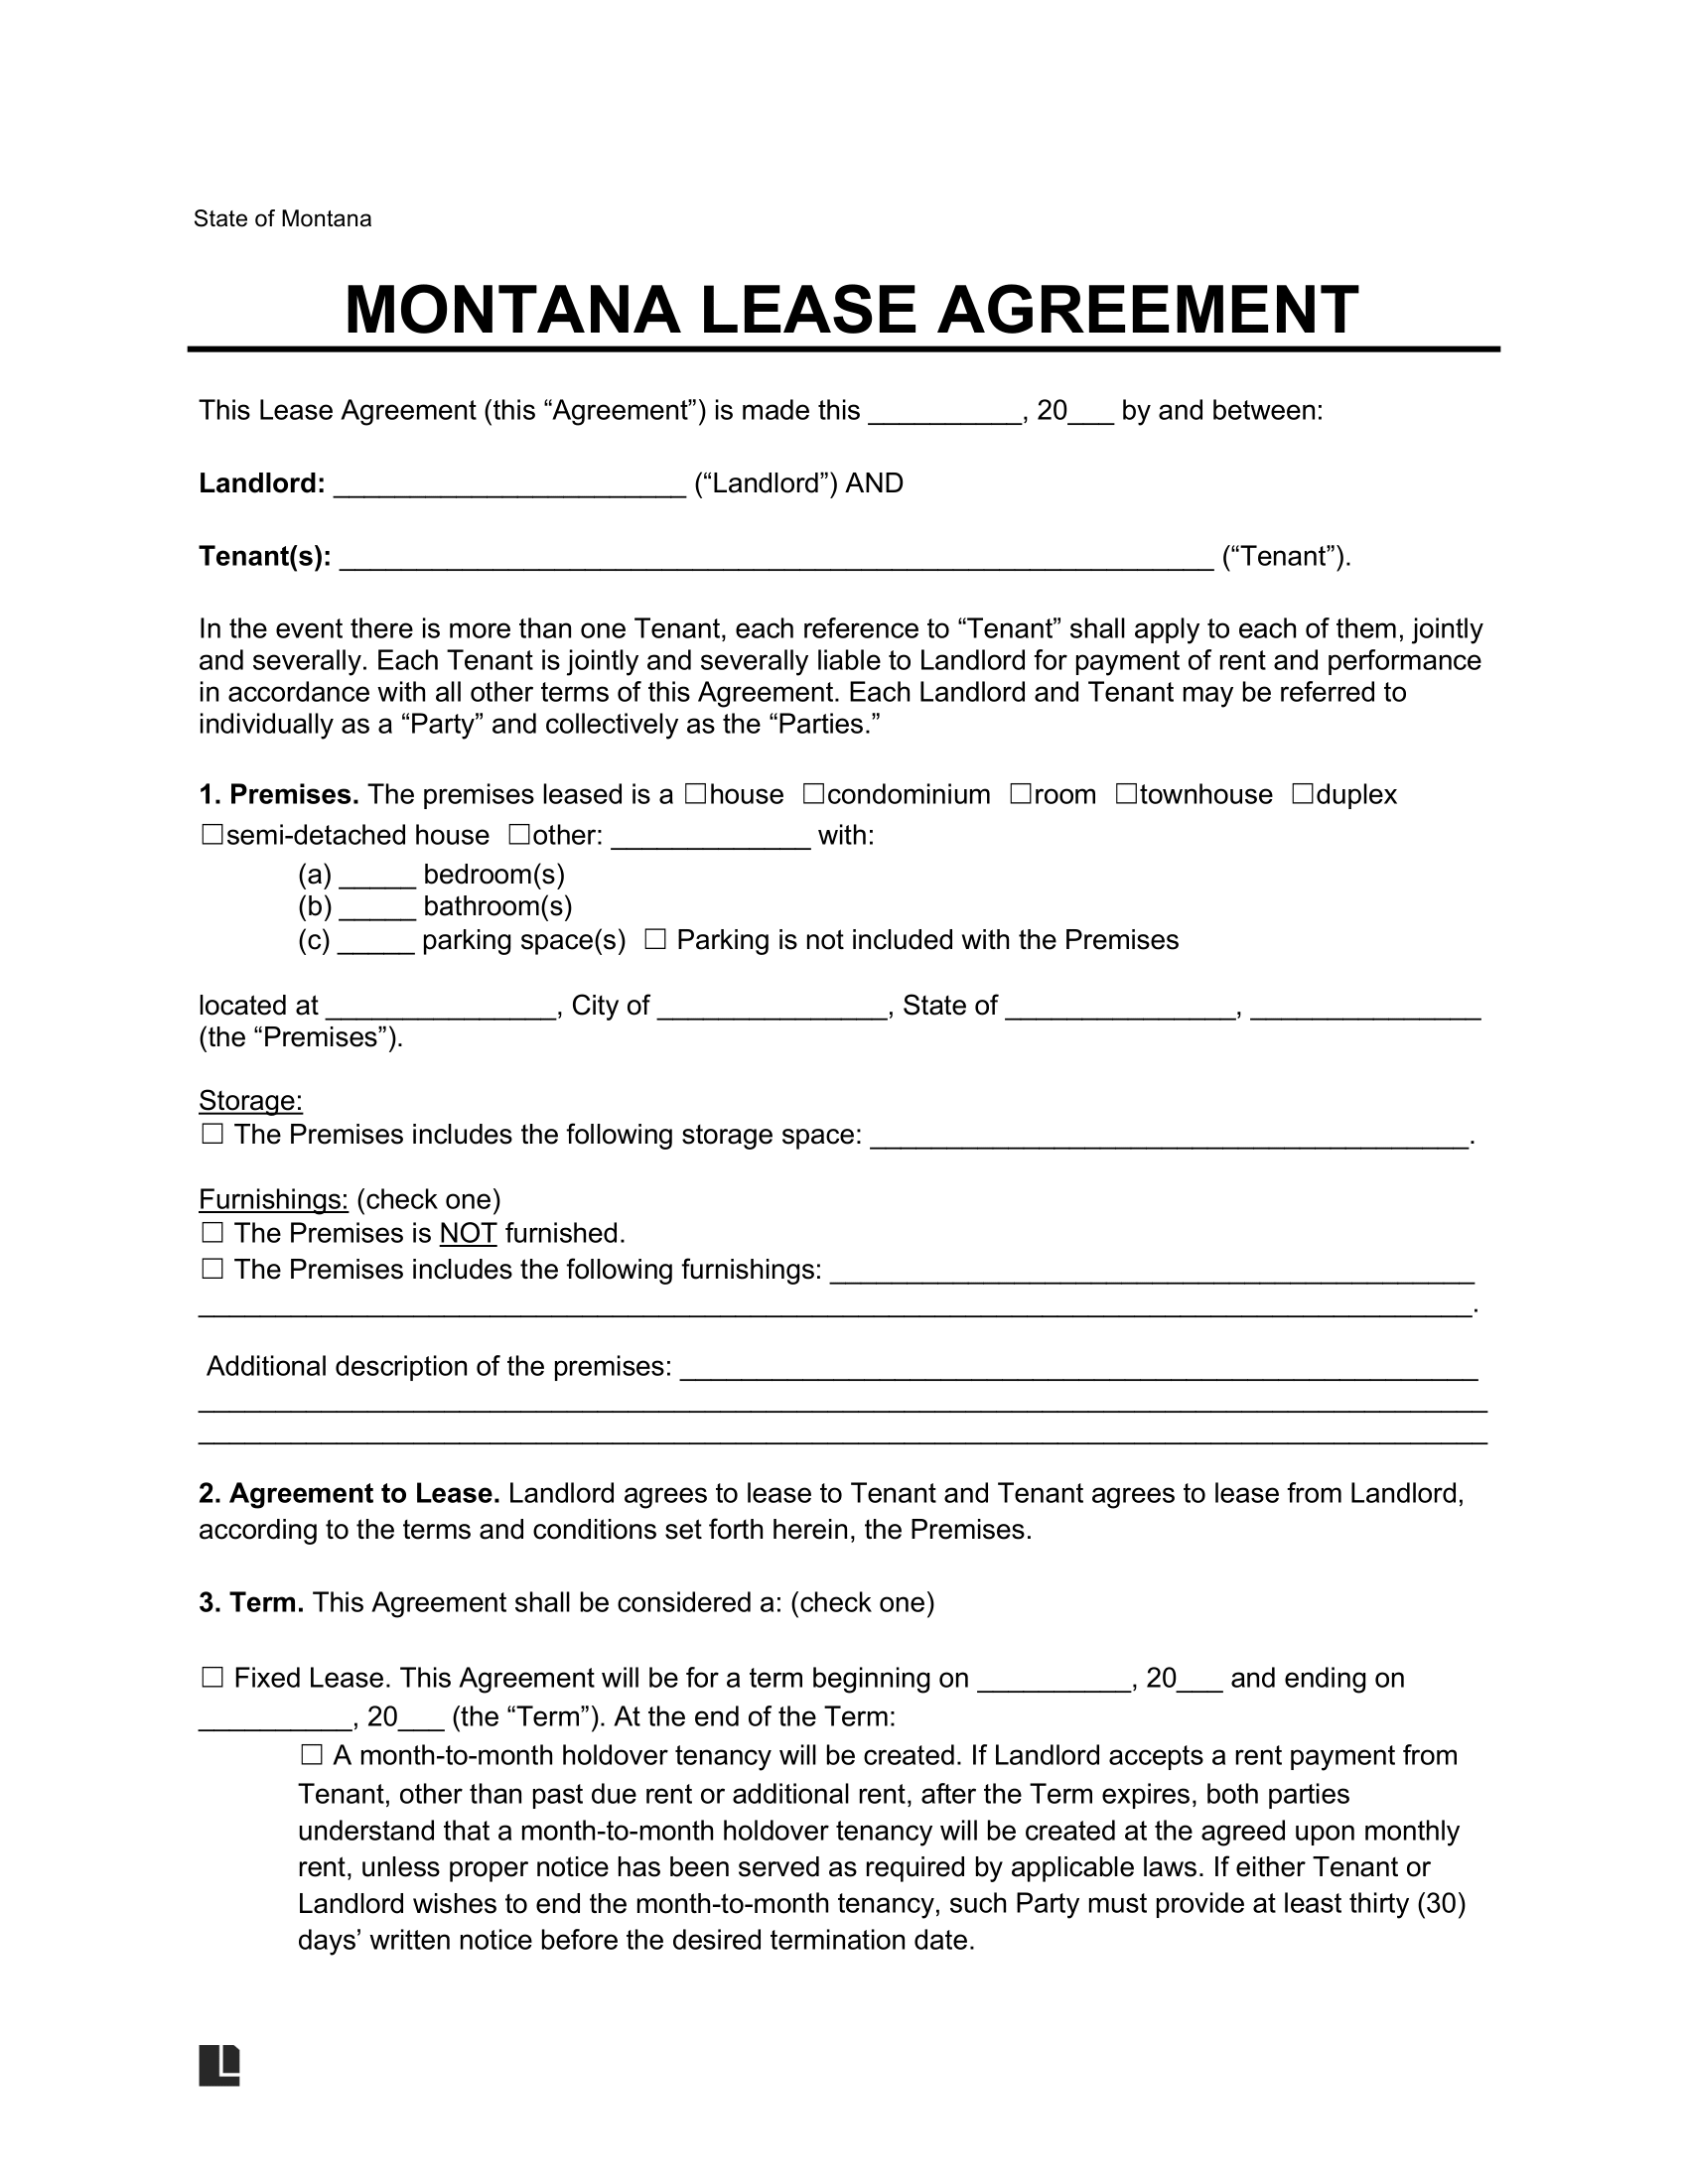 Montana Lease Agreement Template